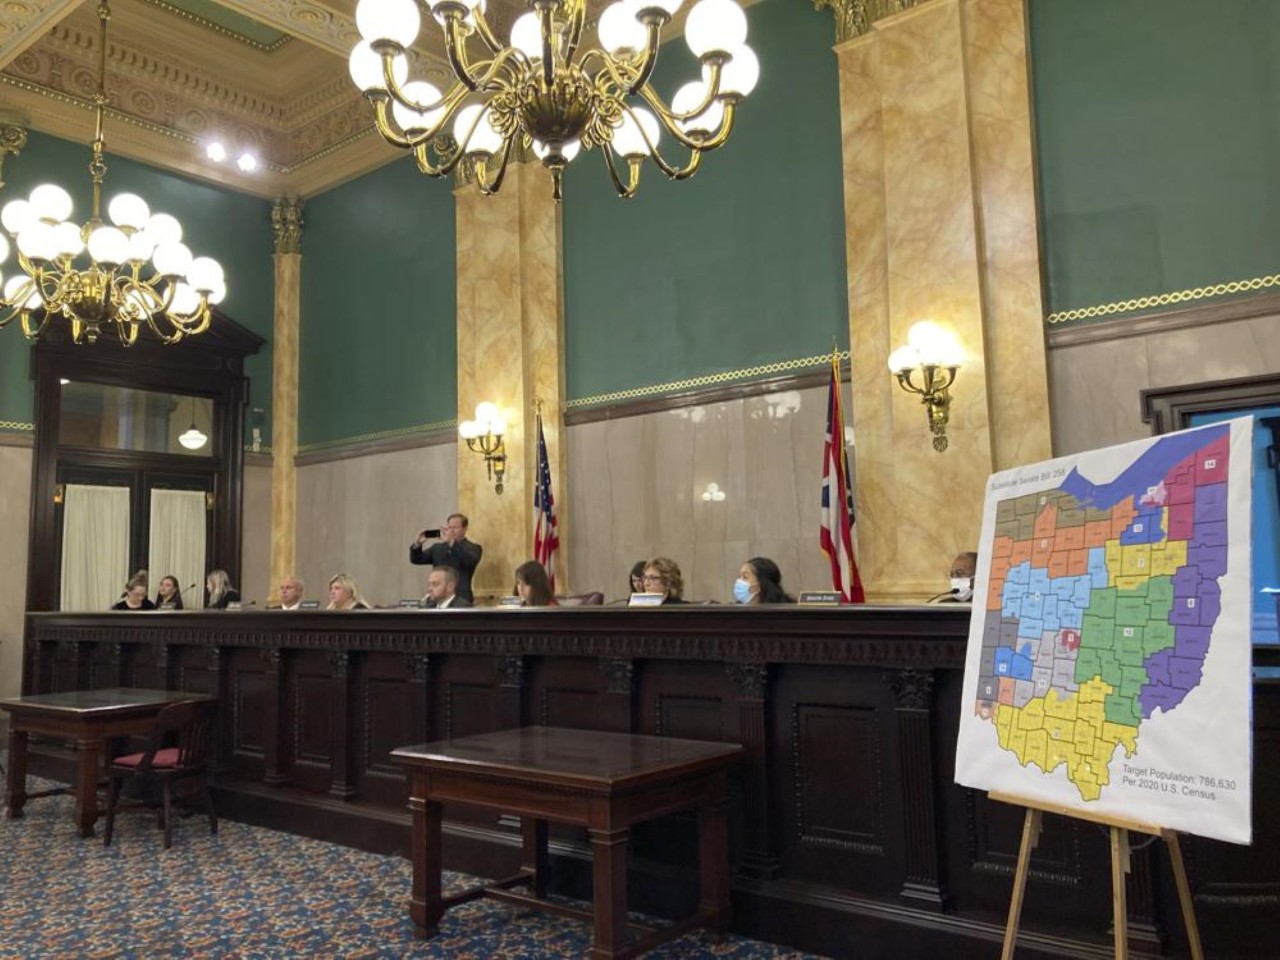 Ohio legislators in session with congressional map